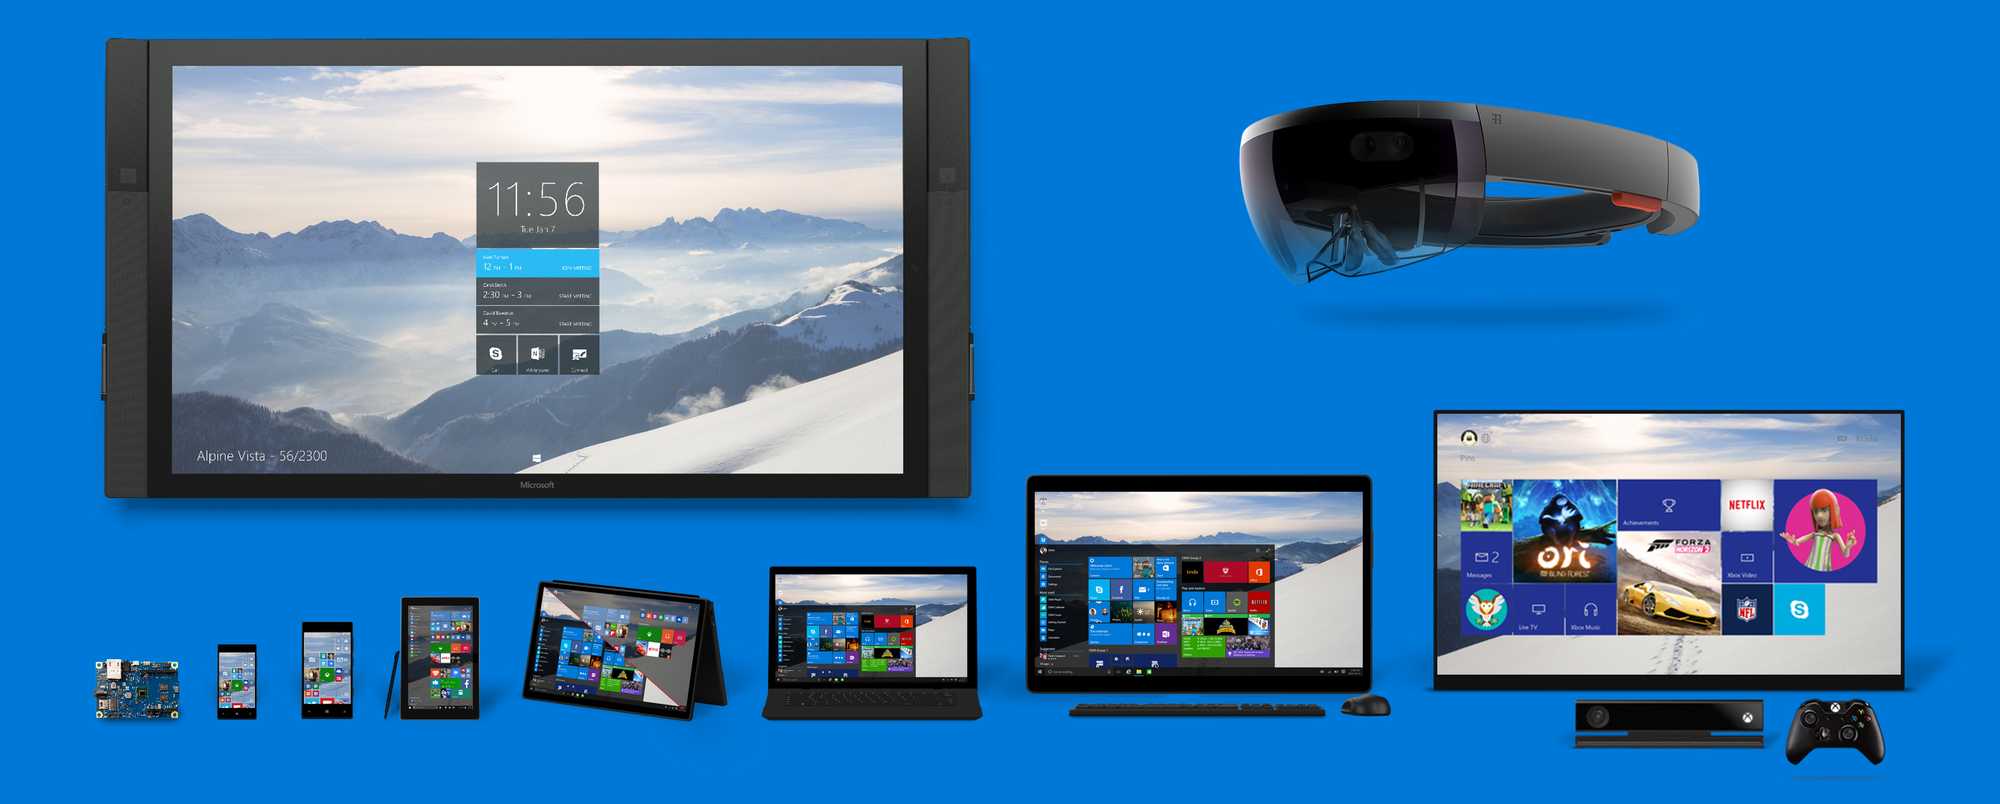 Windows 10: PCs vor Smartphones